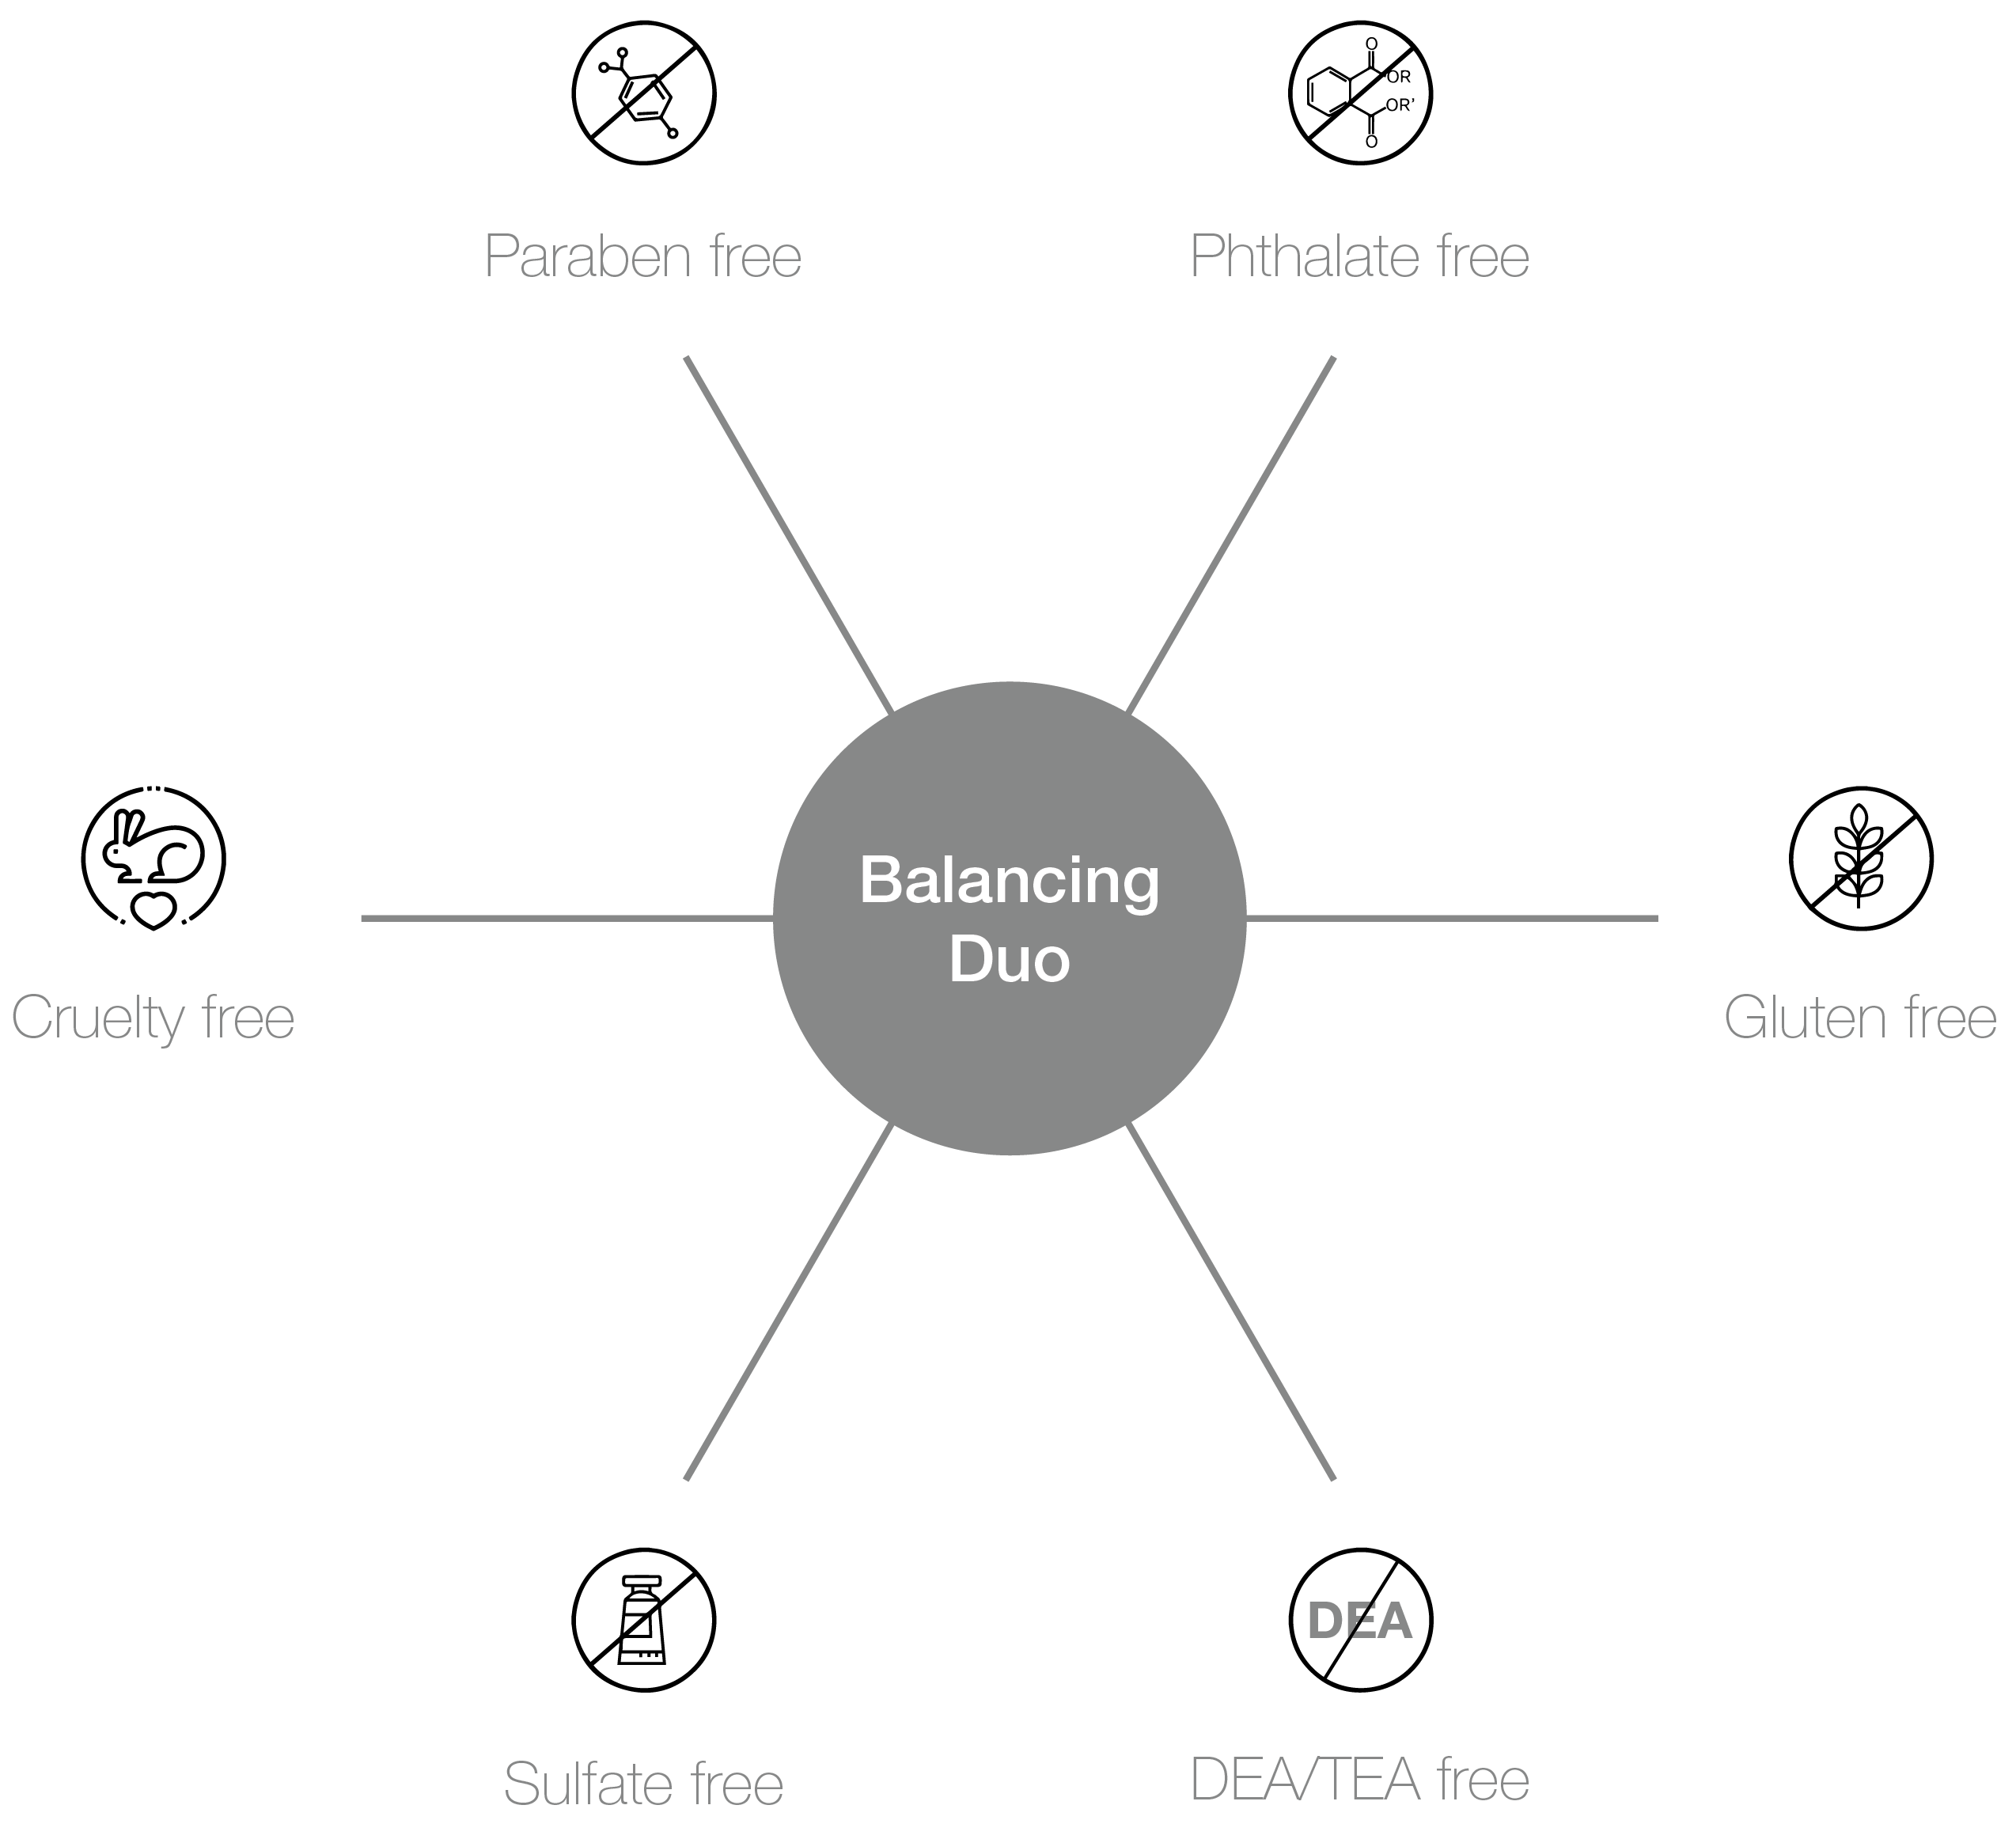 Balancing Pro-benefits